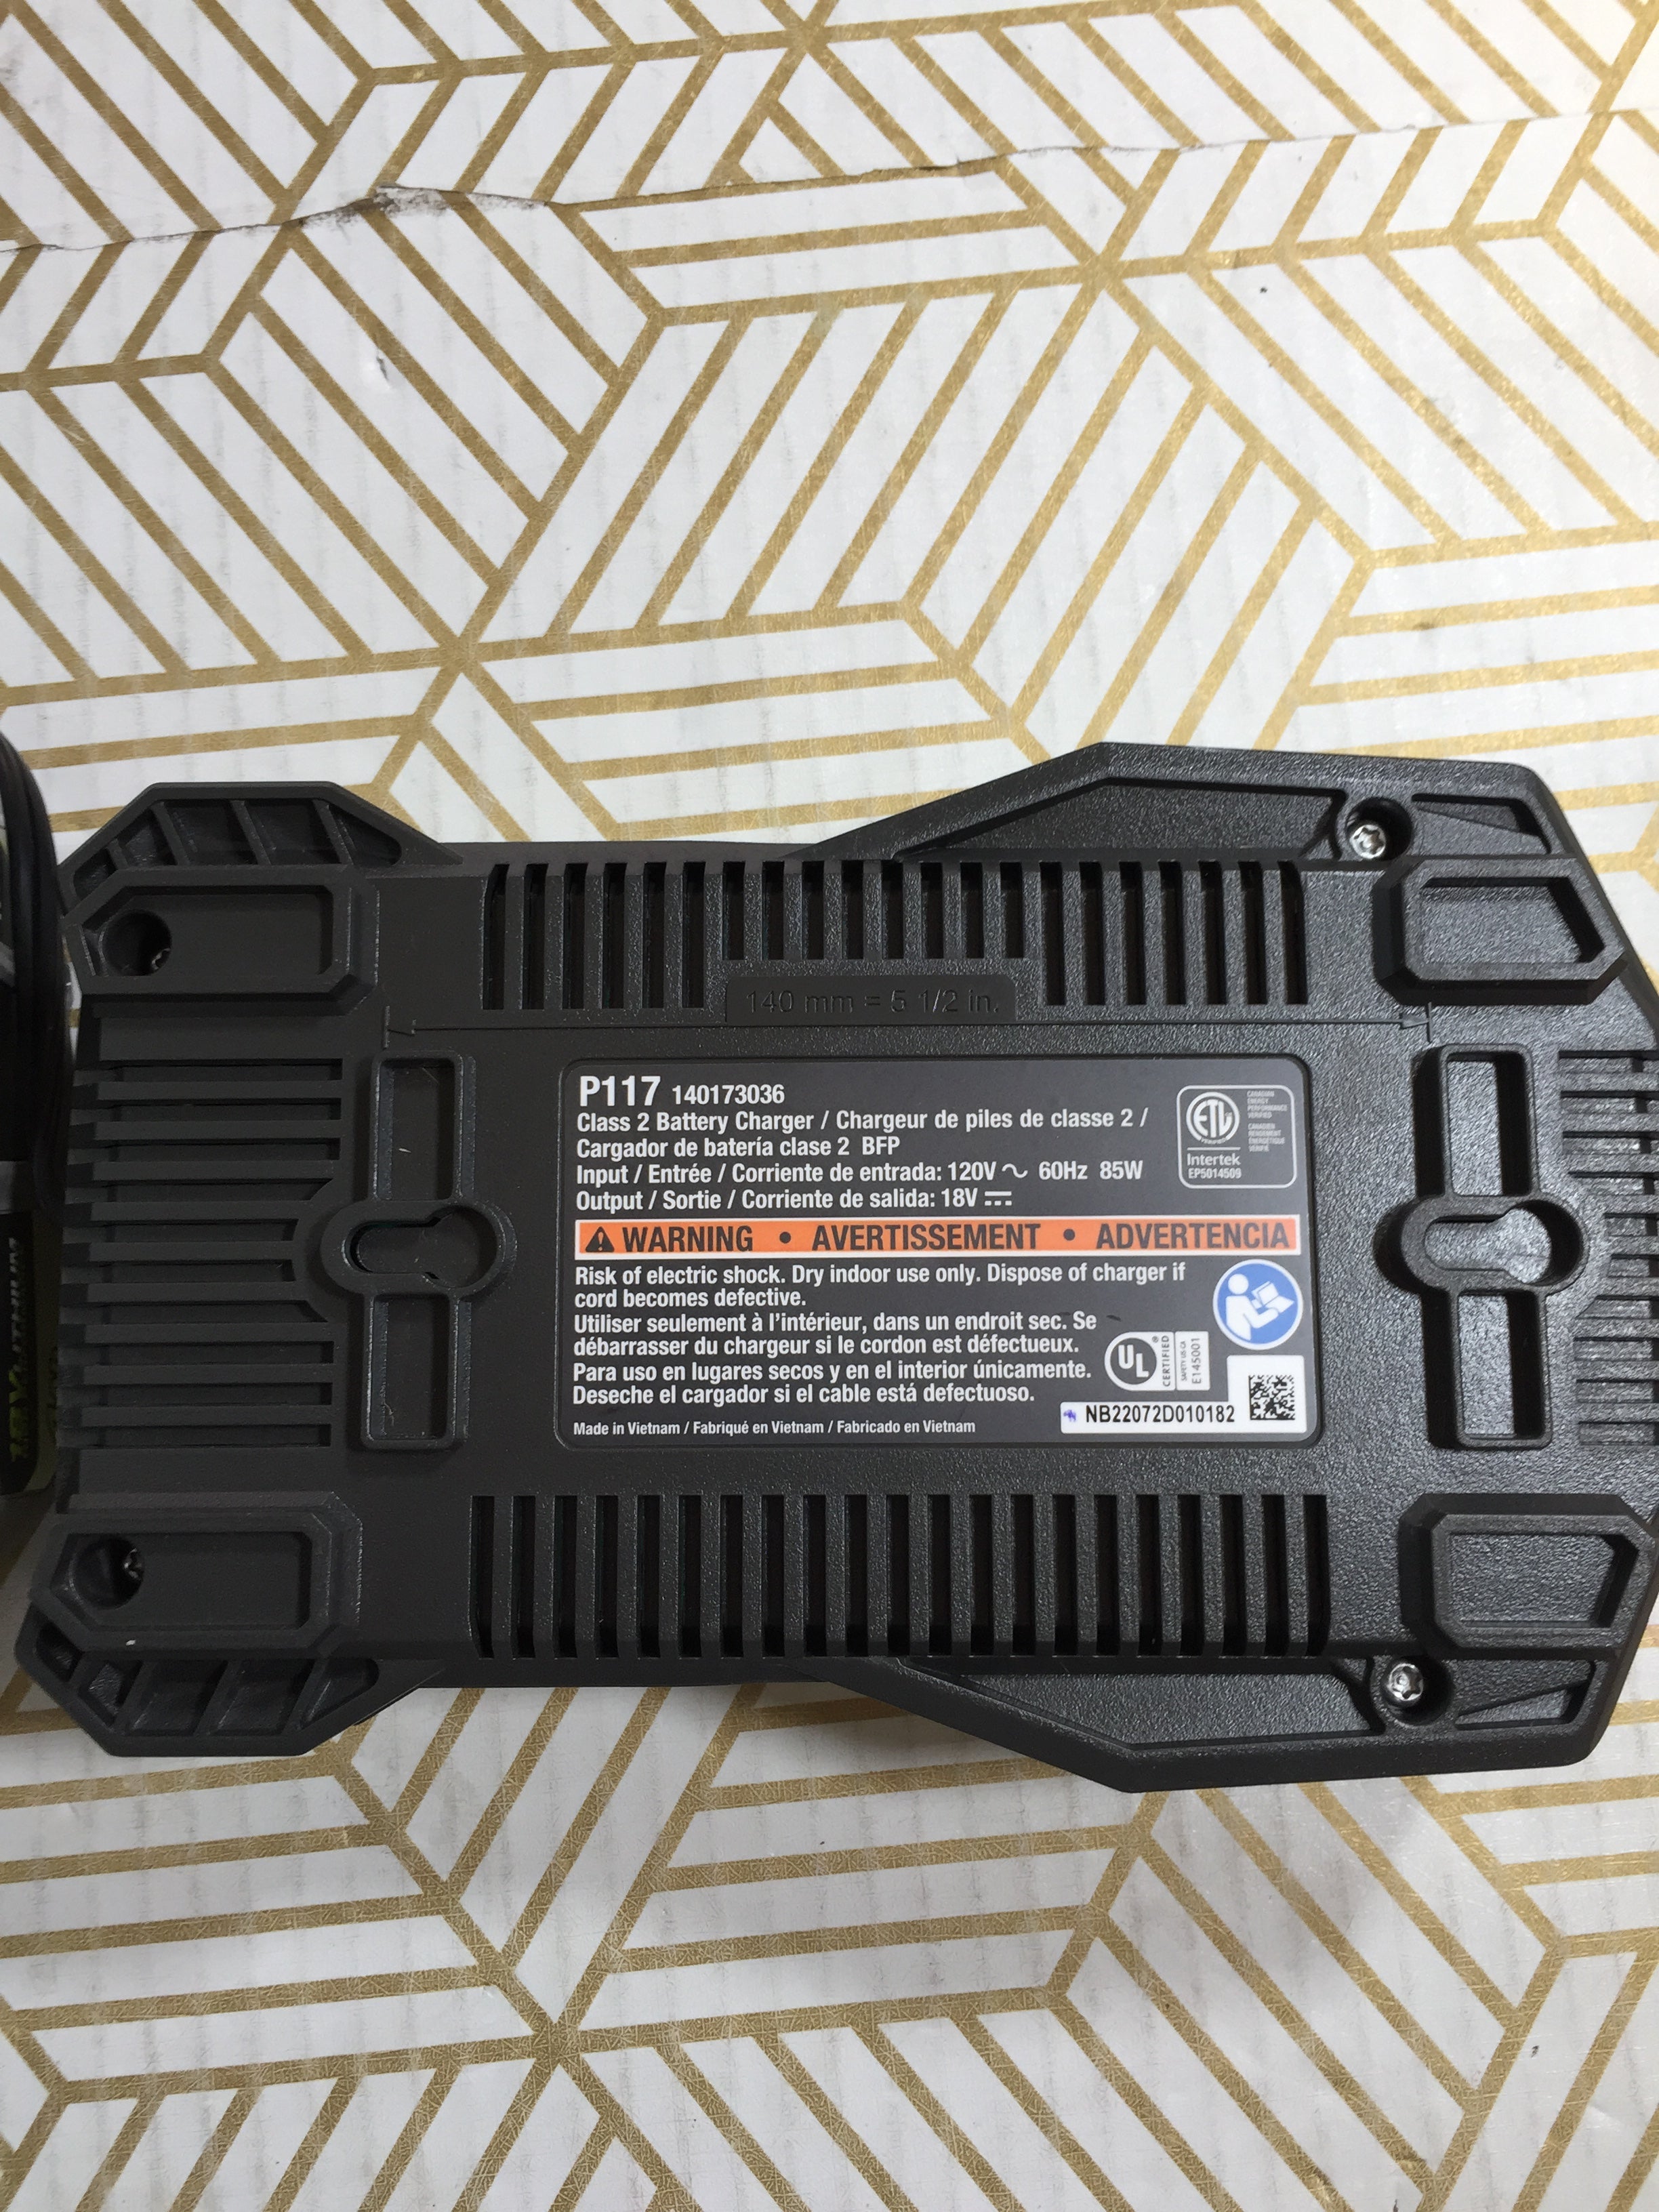 RYOBI ONE+ 18V High Performance 4.0Ah (PBP004) Battery & Charger (P117) (7953728274670)